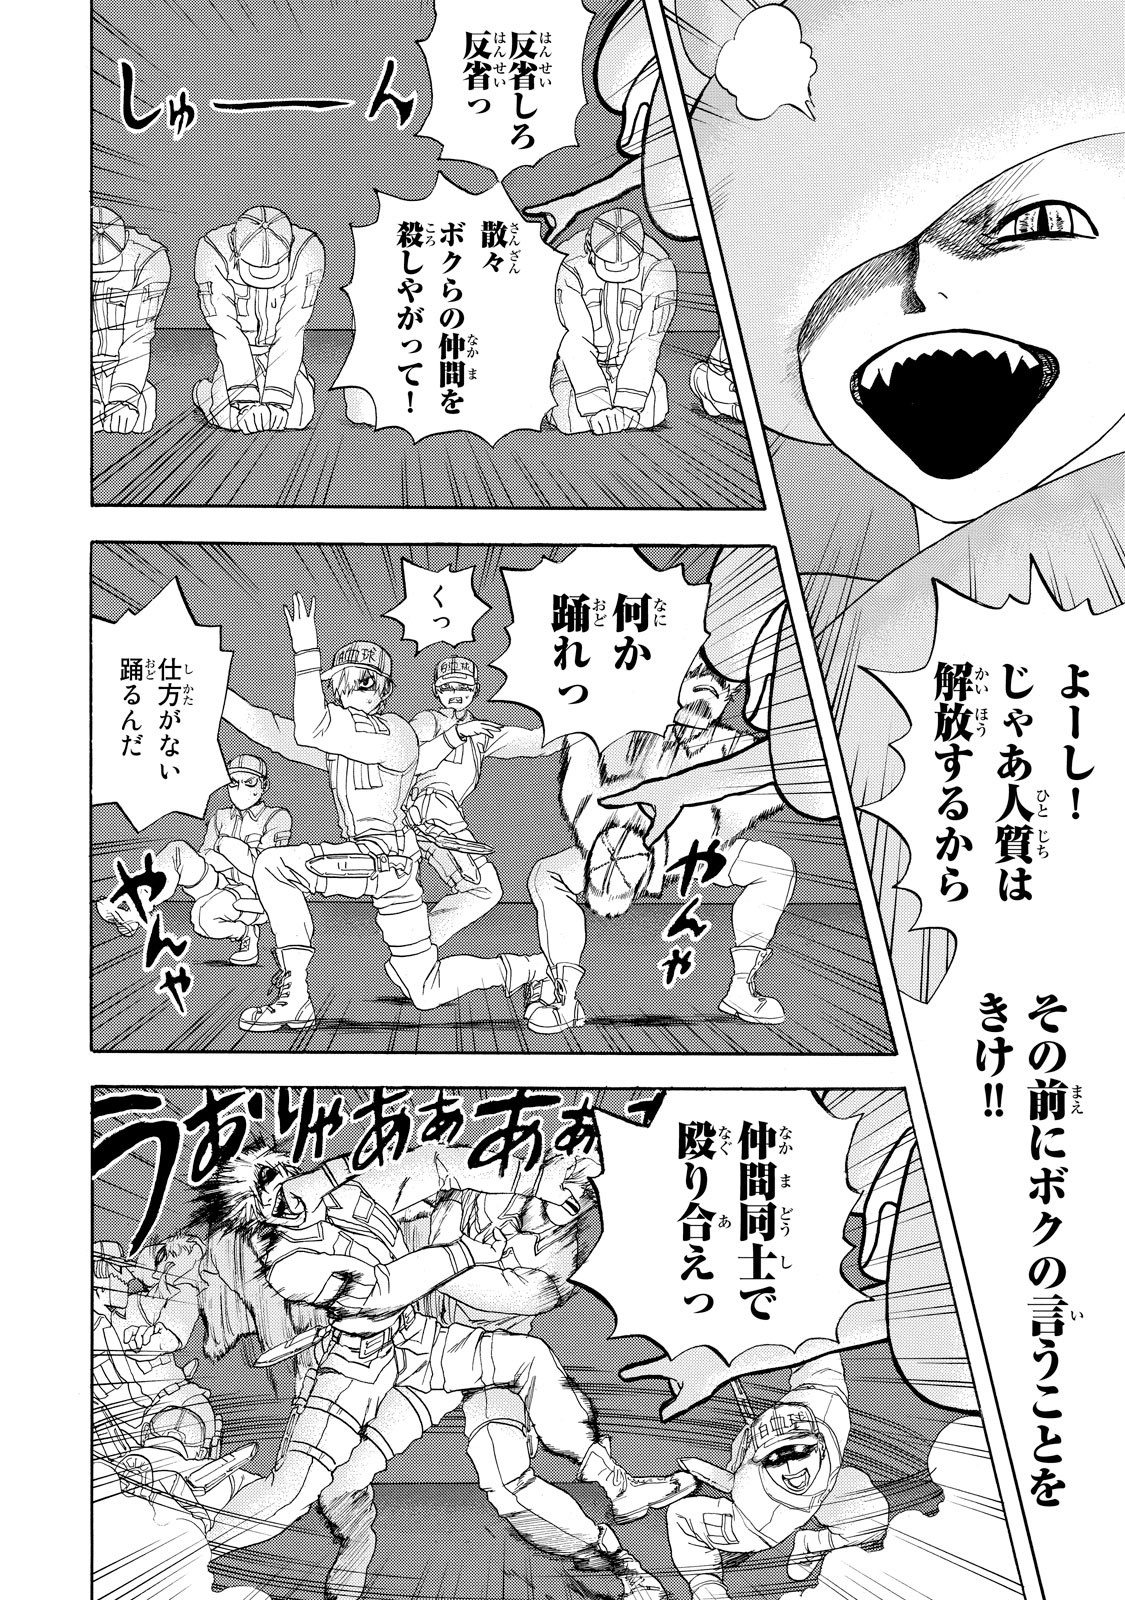 Hataraku Saibou - Chapter 19 - Page 12